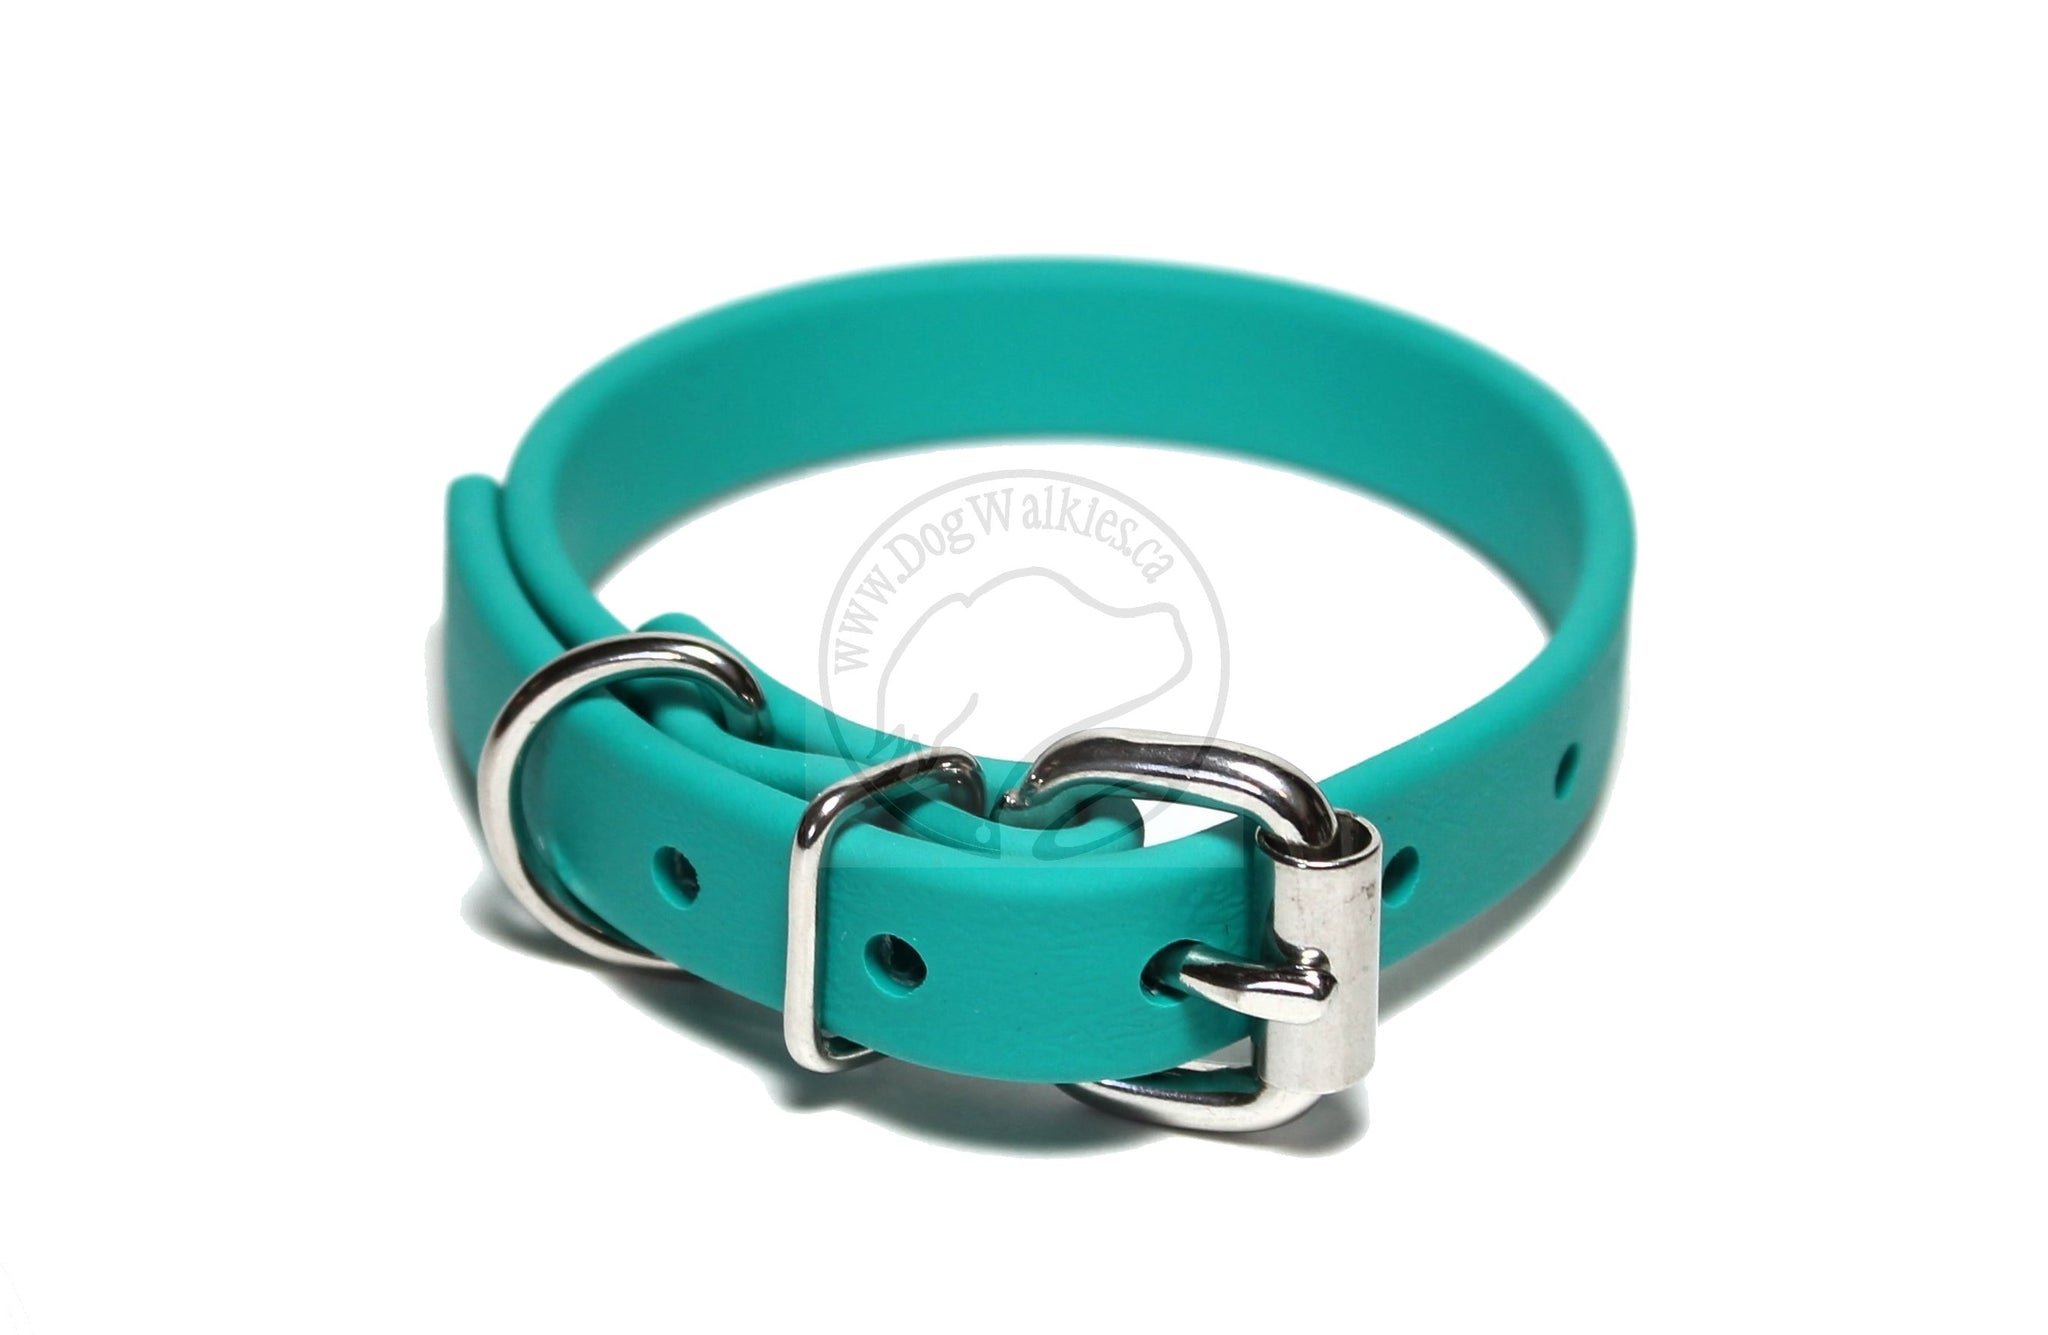 Teal Biothane Dog Collar - 5/8"(16mm) wide